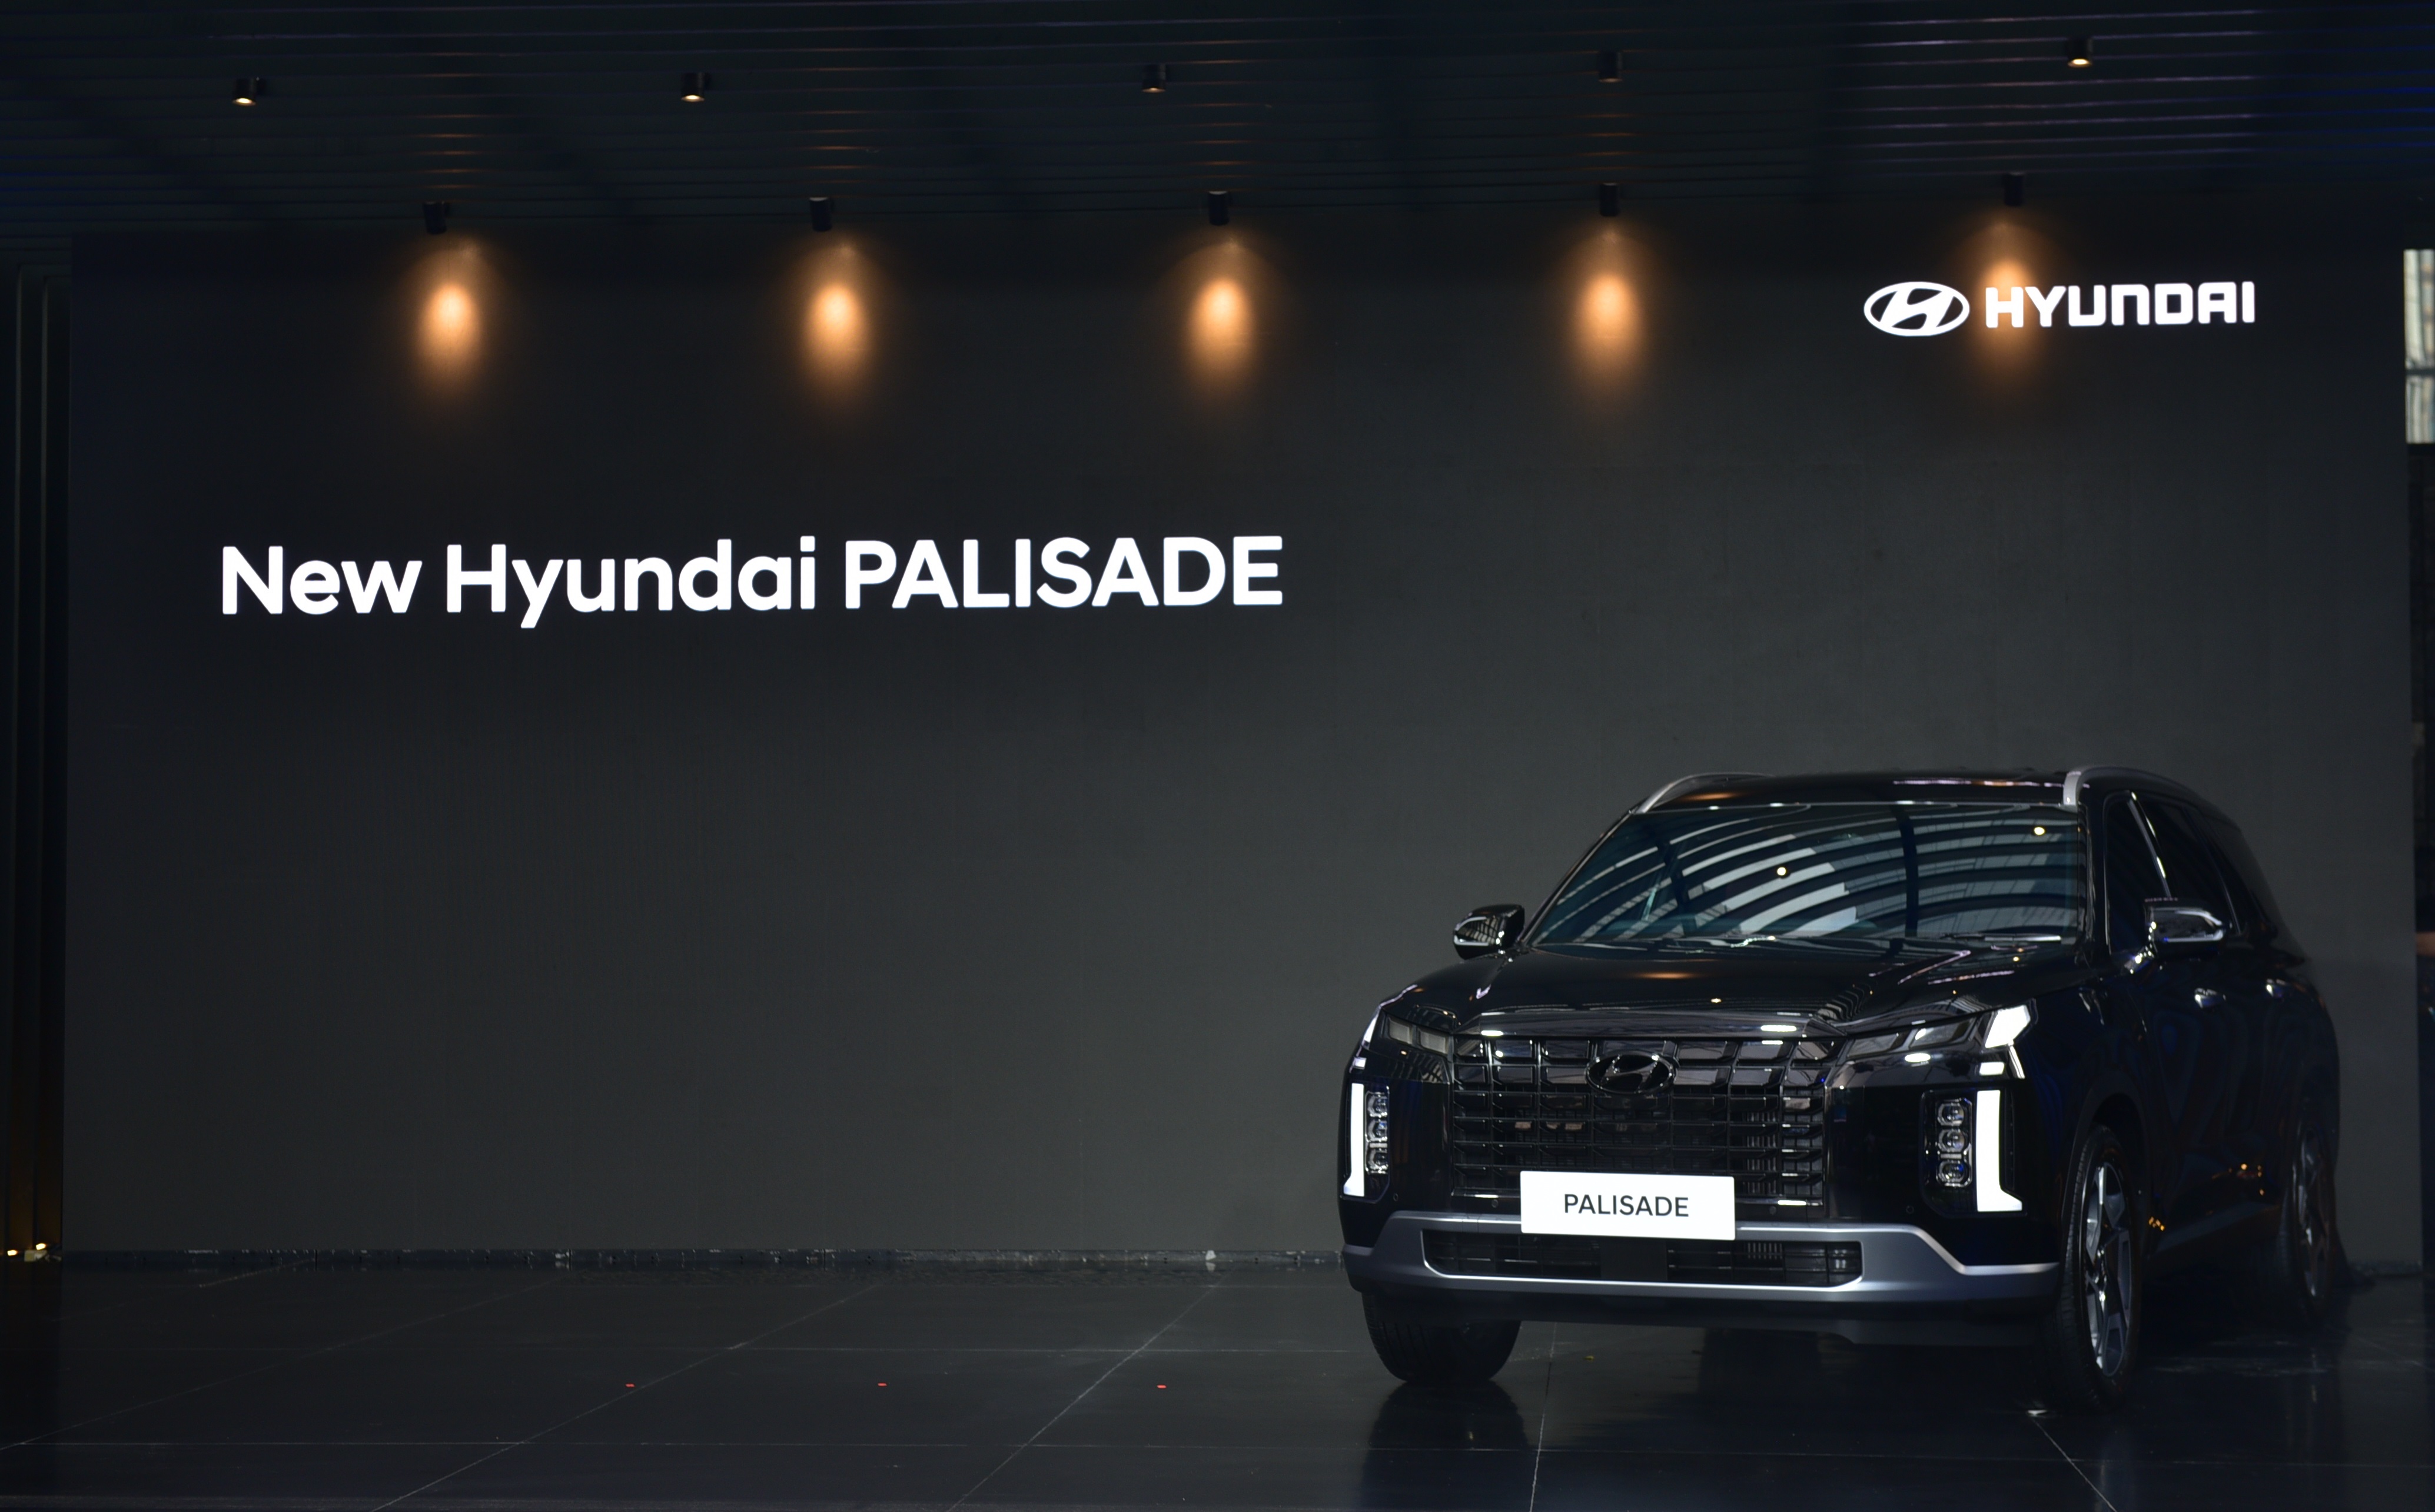 New Hyundai Palisade (Sumber gambar: PT Hyundai Motor Indonesia)